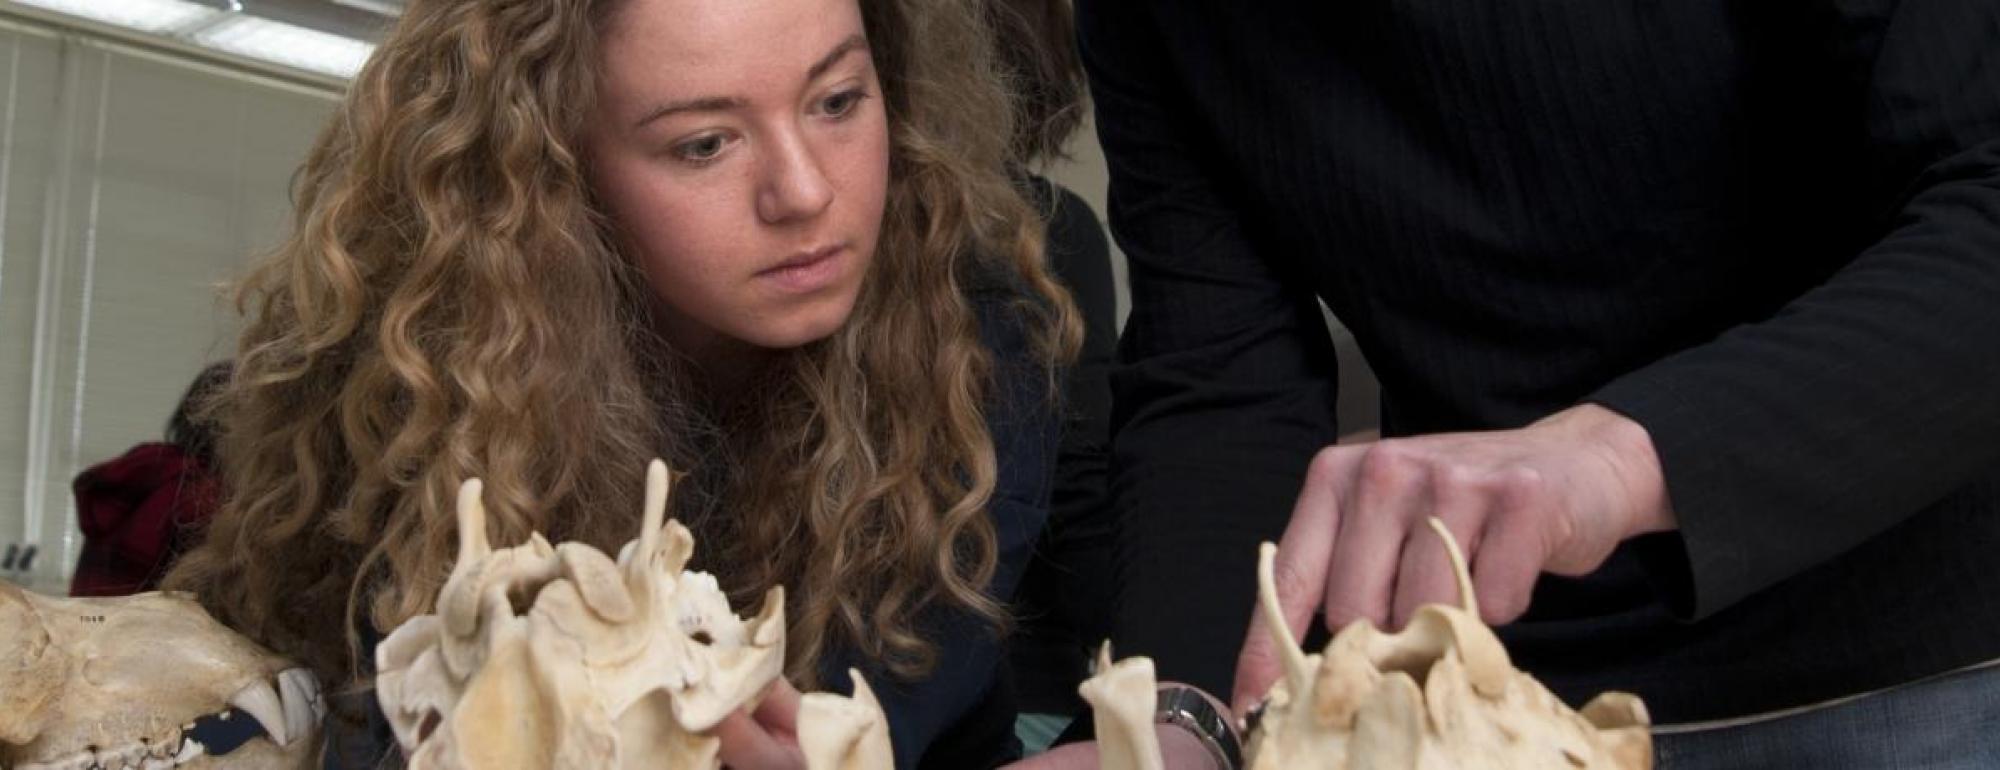 uc davis anthropology student studying bones